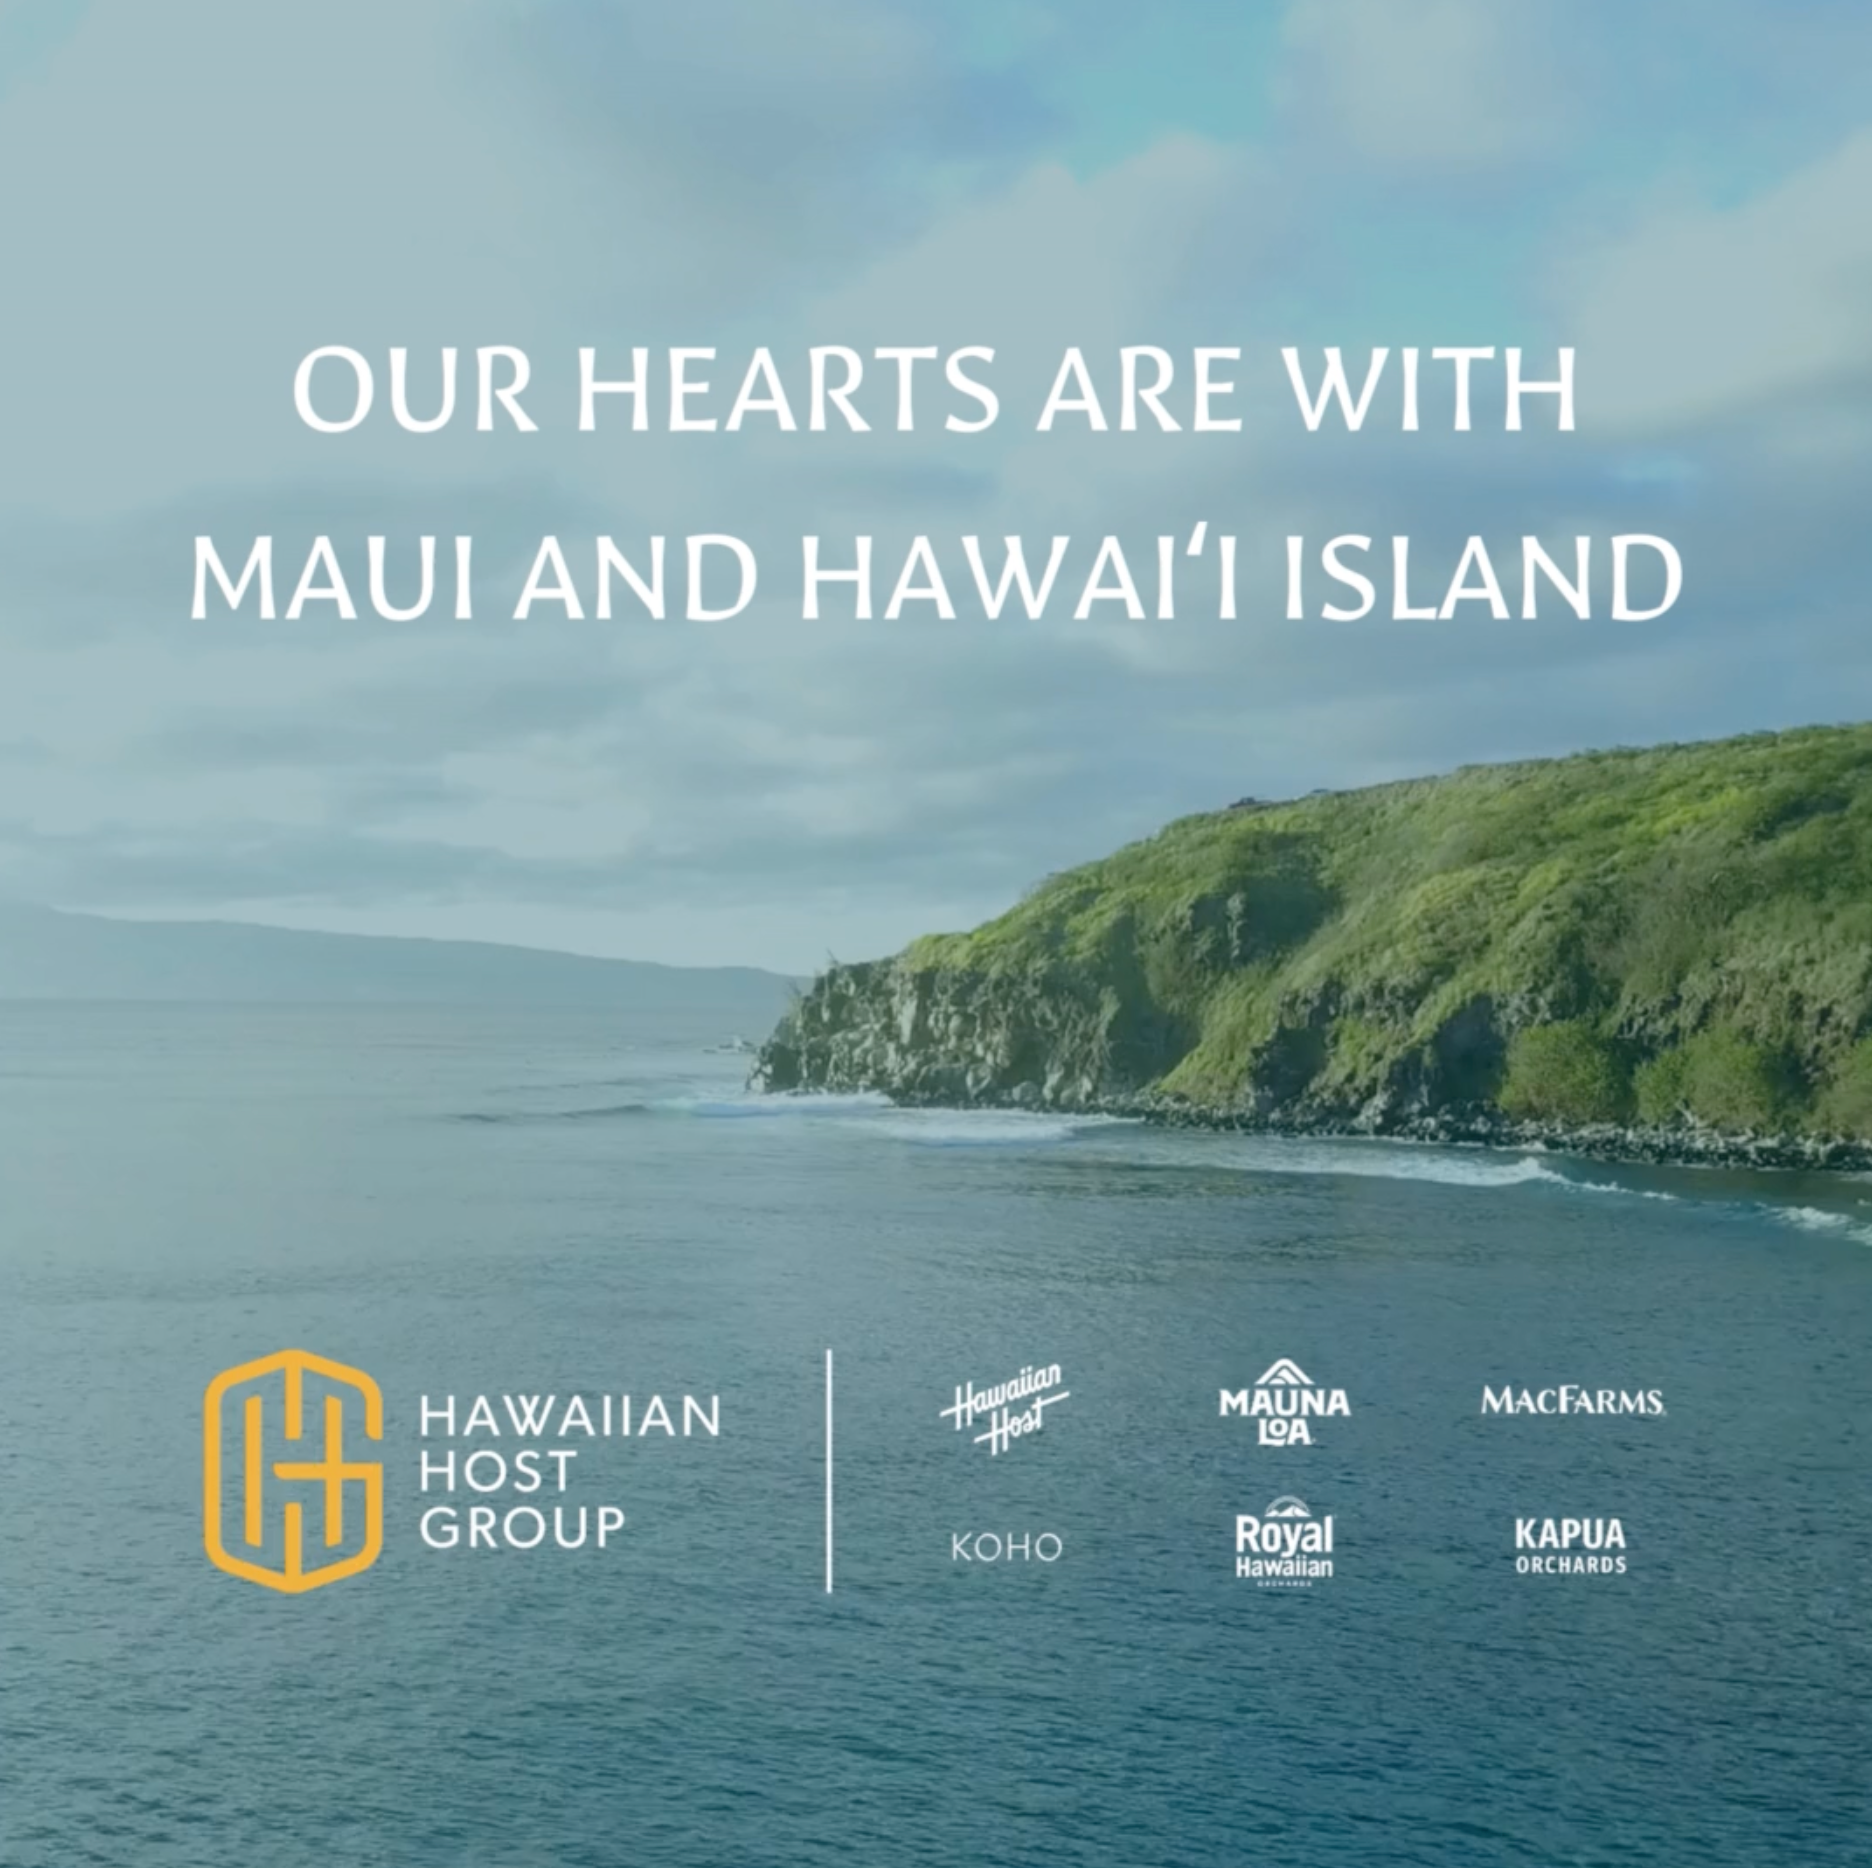 Hawaiian Host Group supports Maui